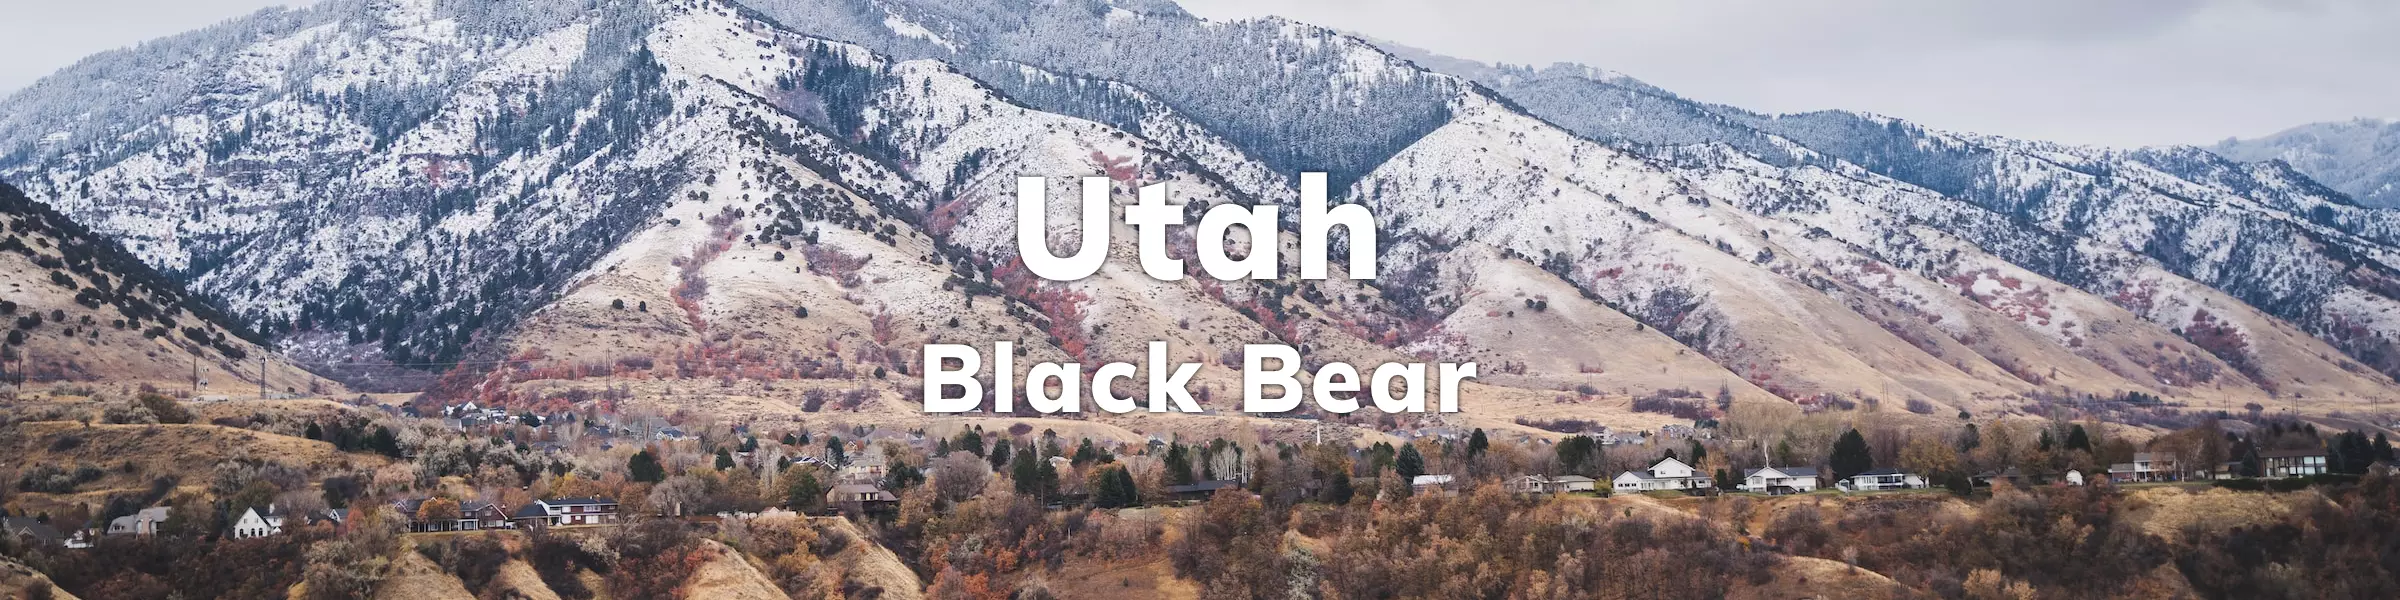 Utah Black Bear